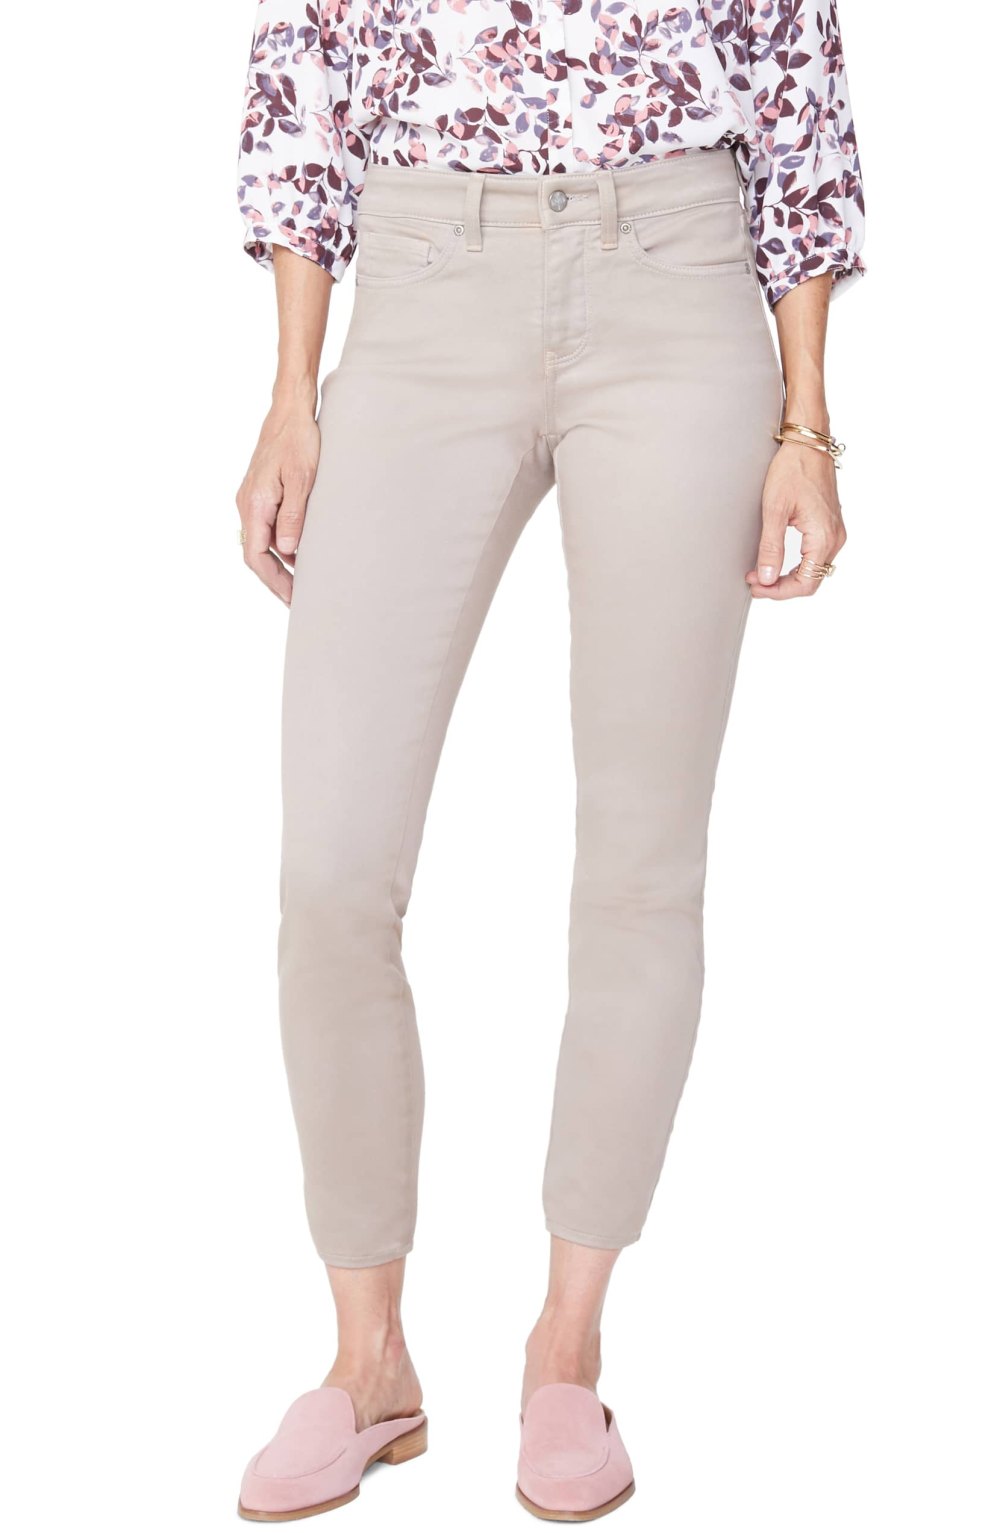 NYDJ Ami High-Waist Colored Stretch Skinny Jeans